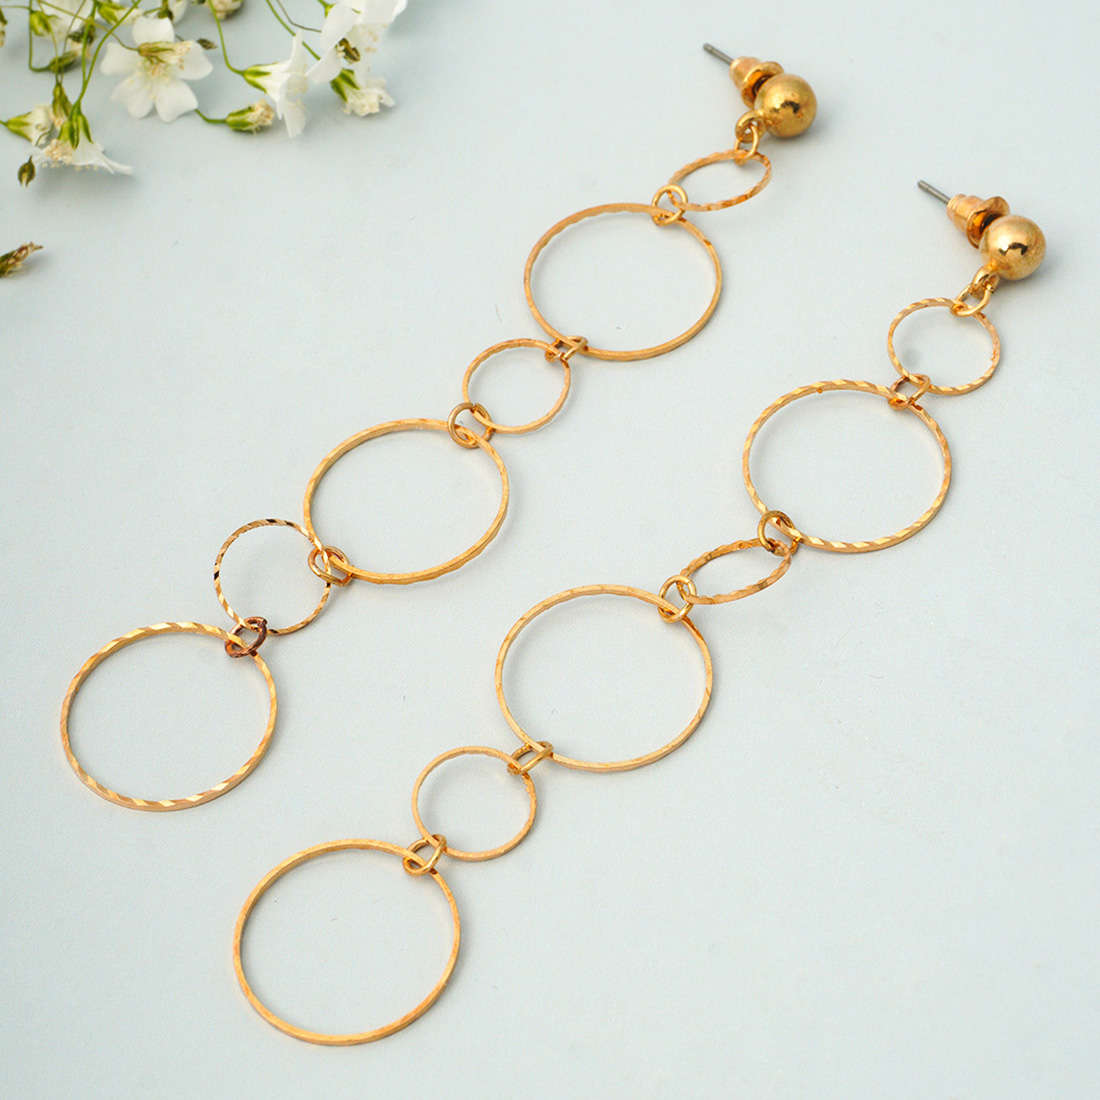 Gold Ring Chain Earrings
